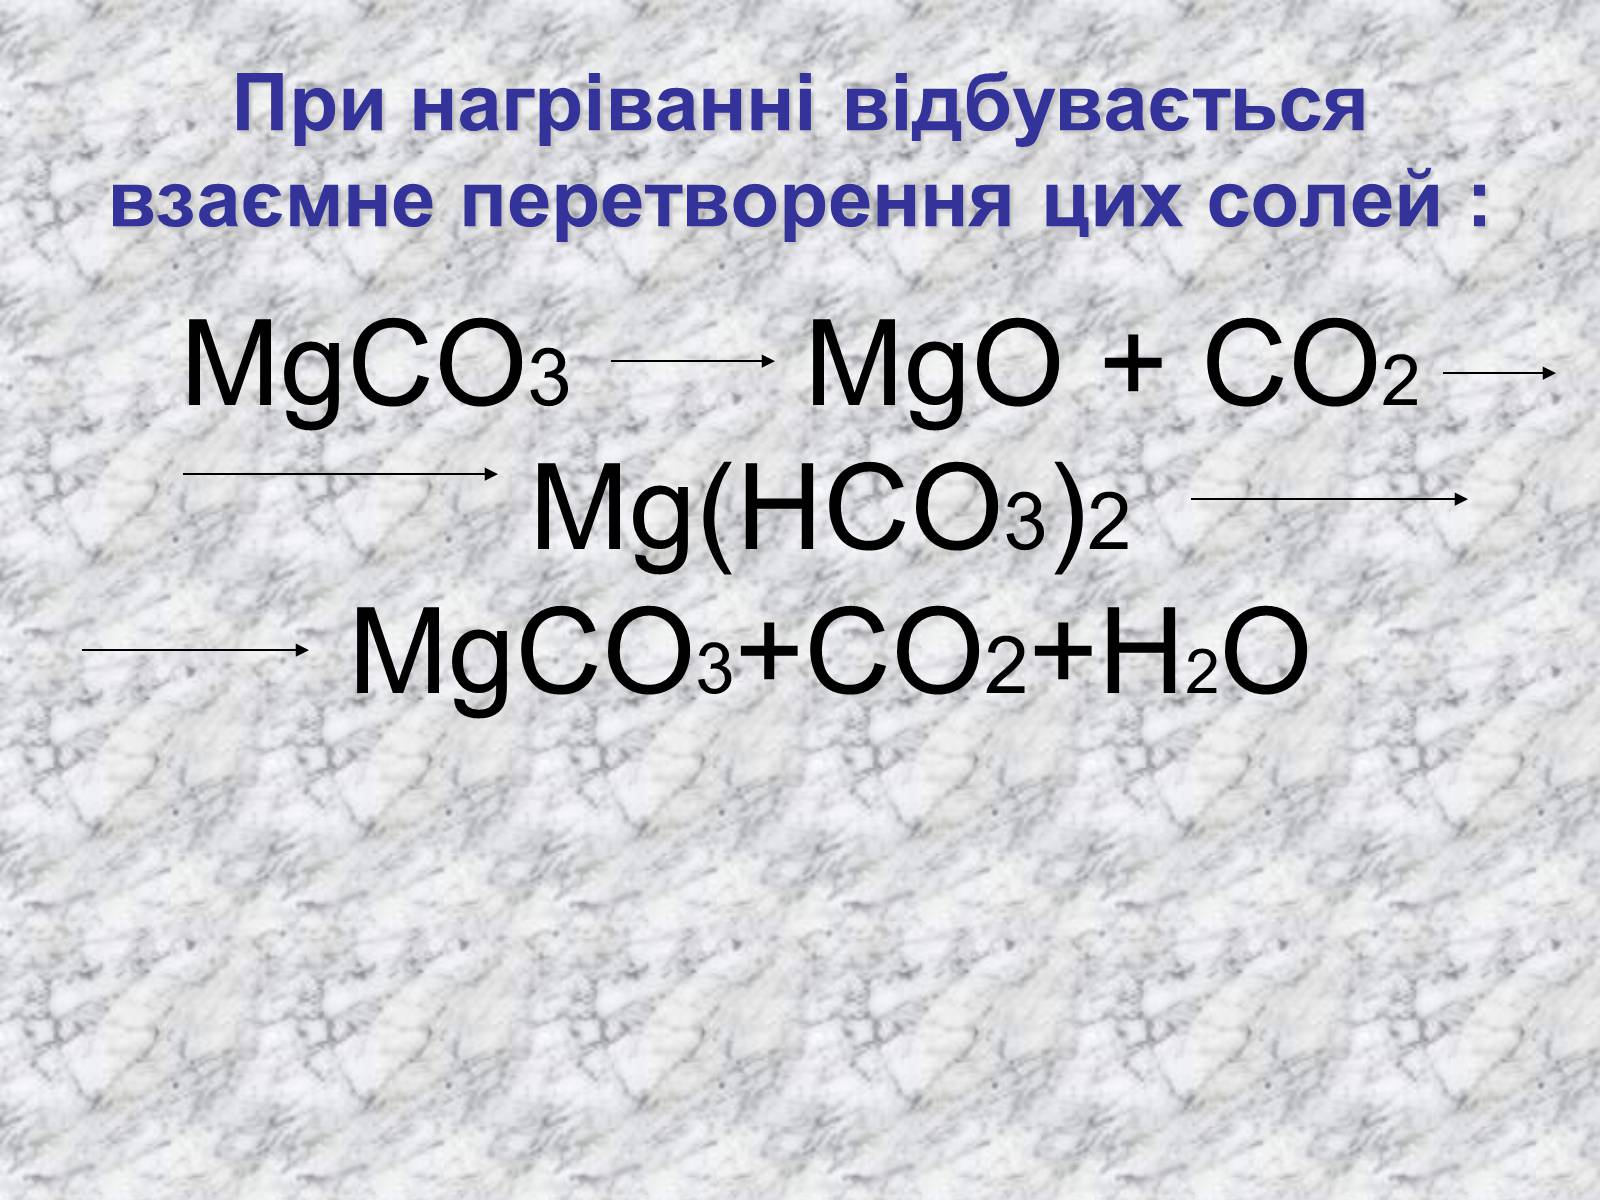 Mgo h2o какая реакция. MG(hco3)2 = mgco3 + co2 + h2o. MGO+co2. Mgco3+co2+h2o. Mgco3+co2 раствор.